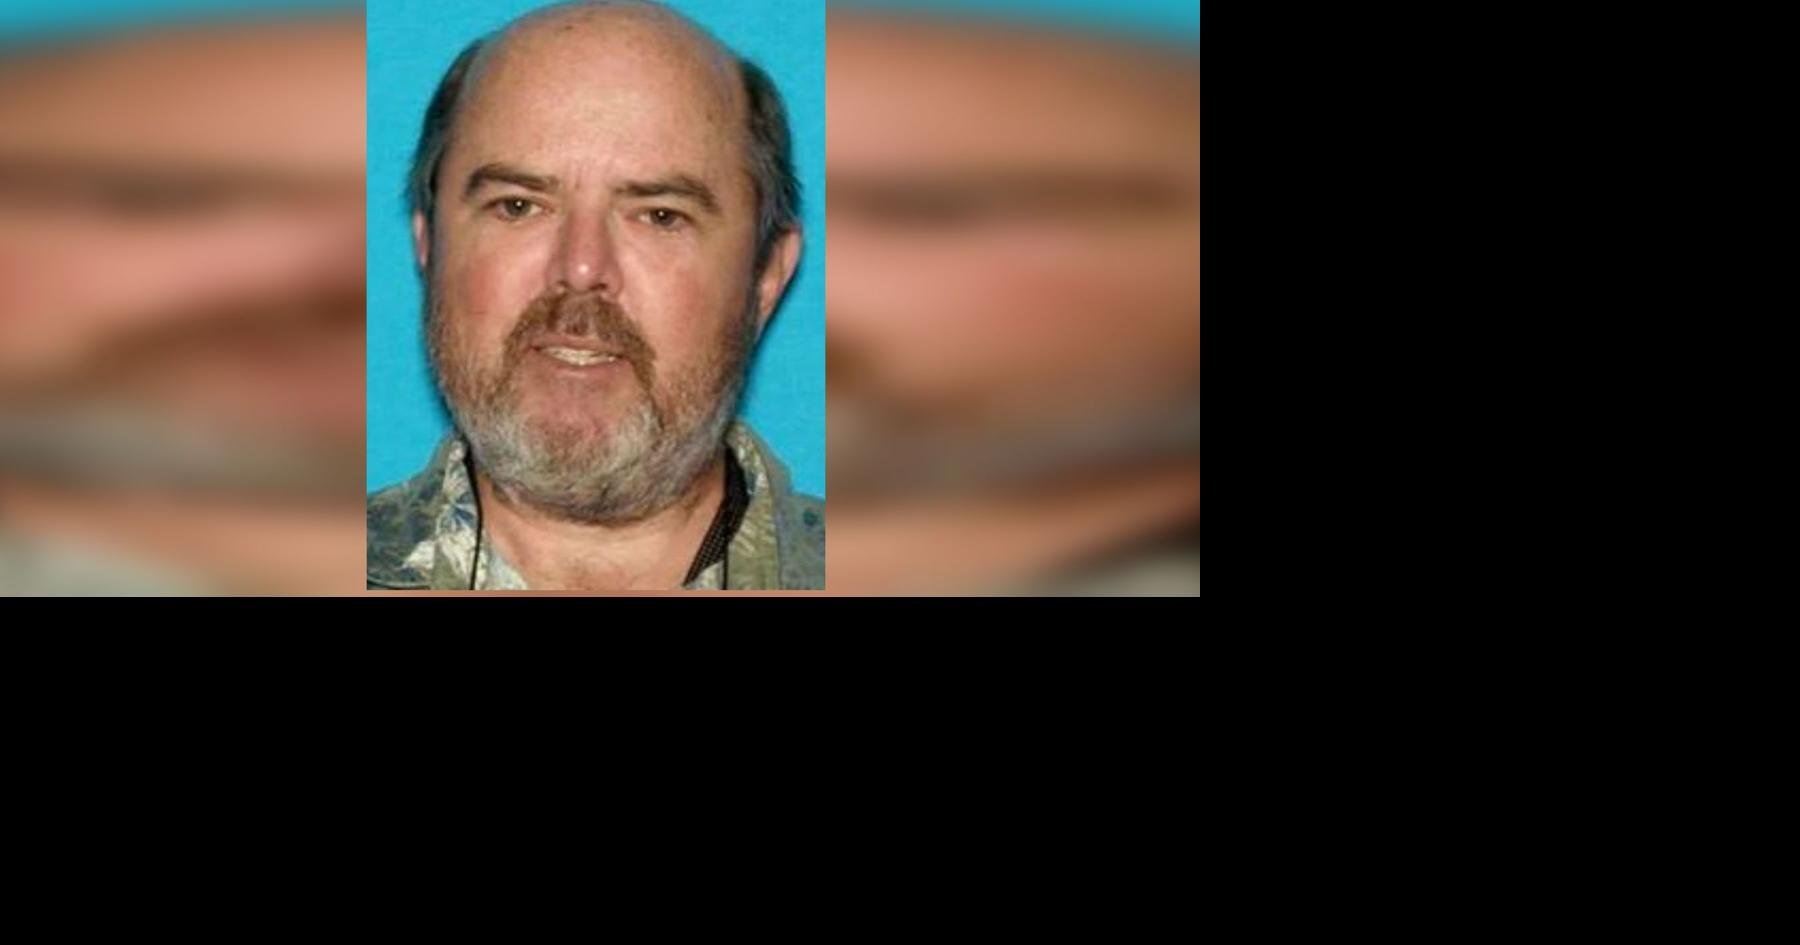 Update Missing Coeur Dalene Man Found Safe News 6483